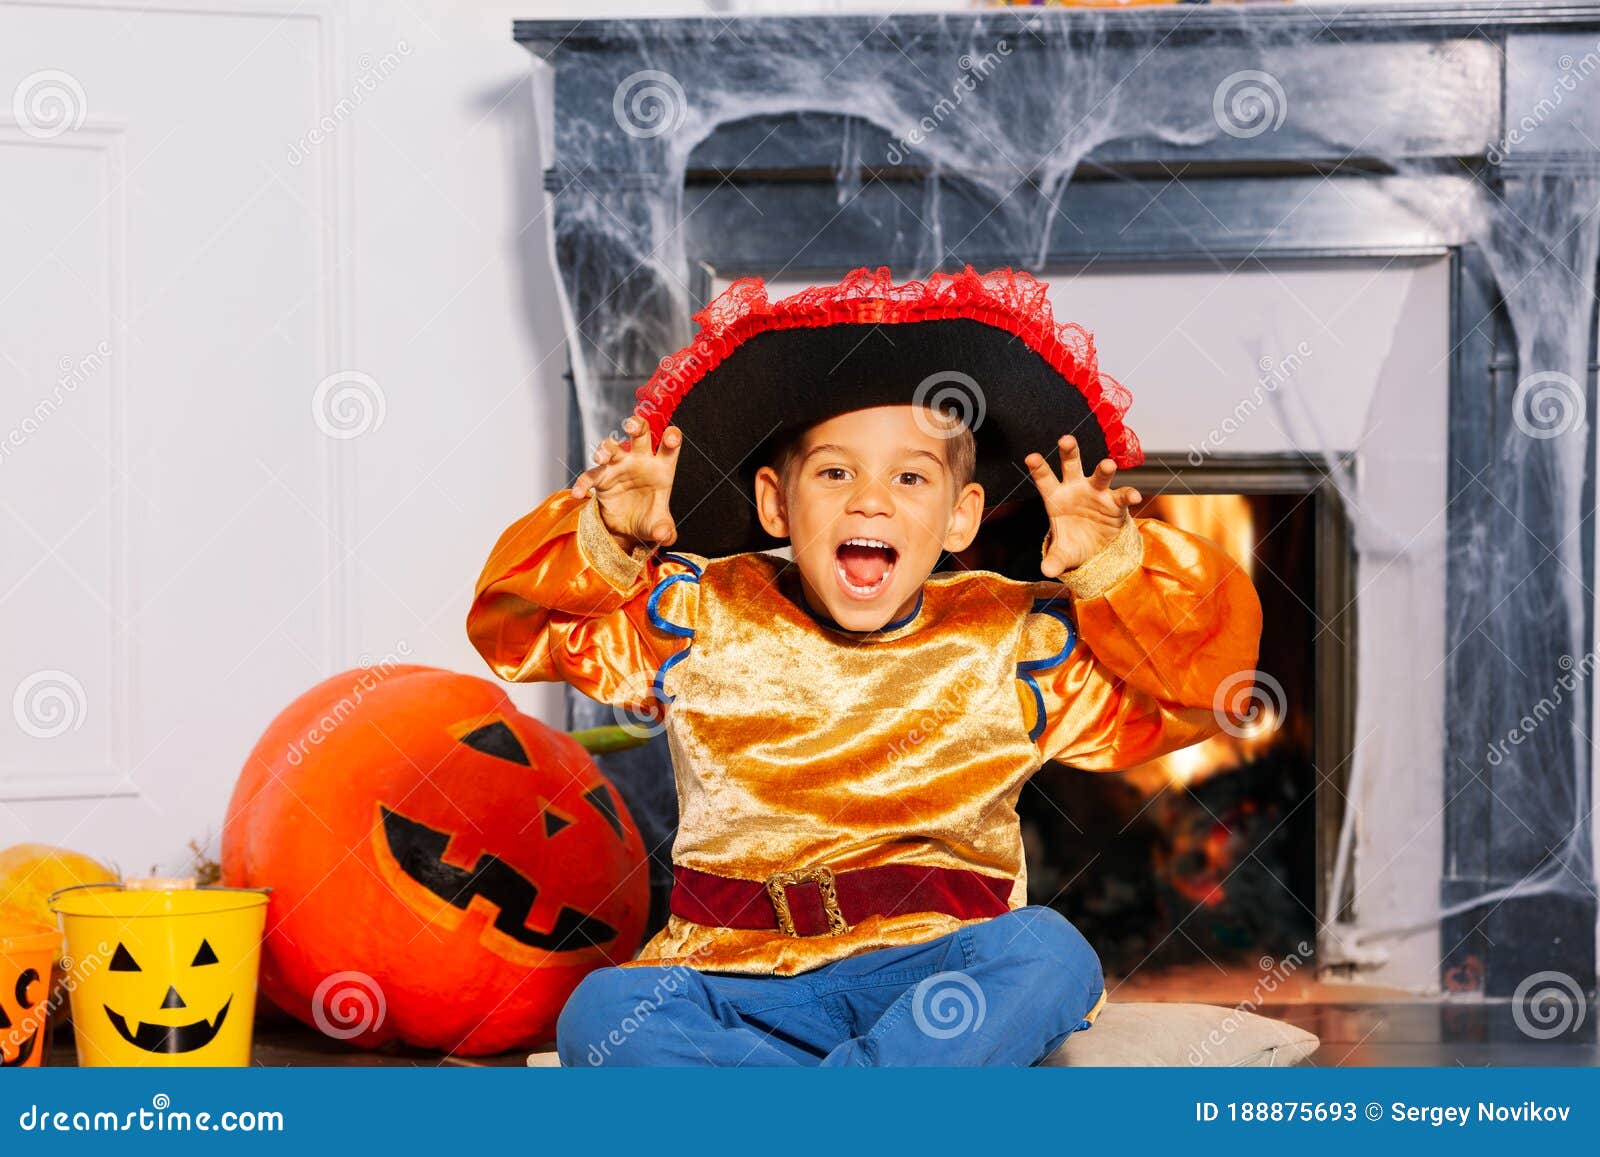 Happy Boy with Spooky Gesture in Halloween Costume Stock Image - Image ...